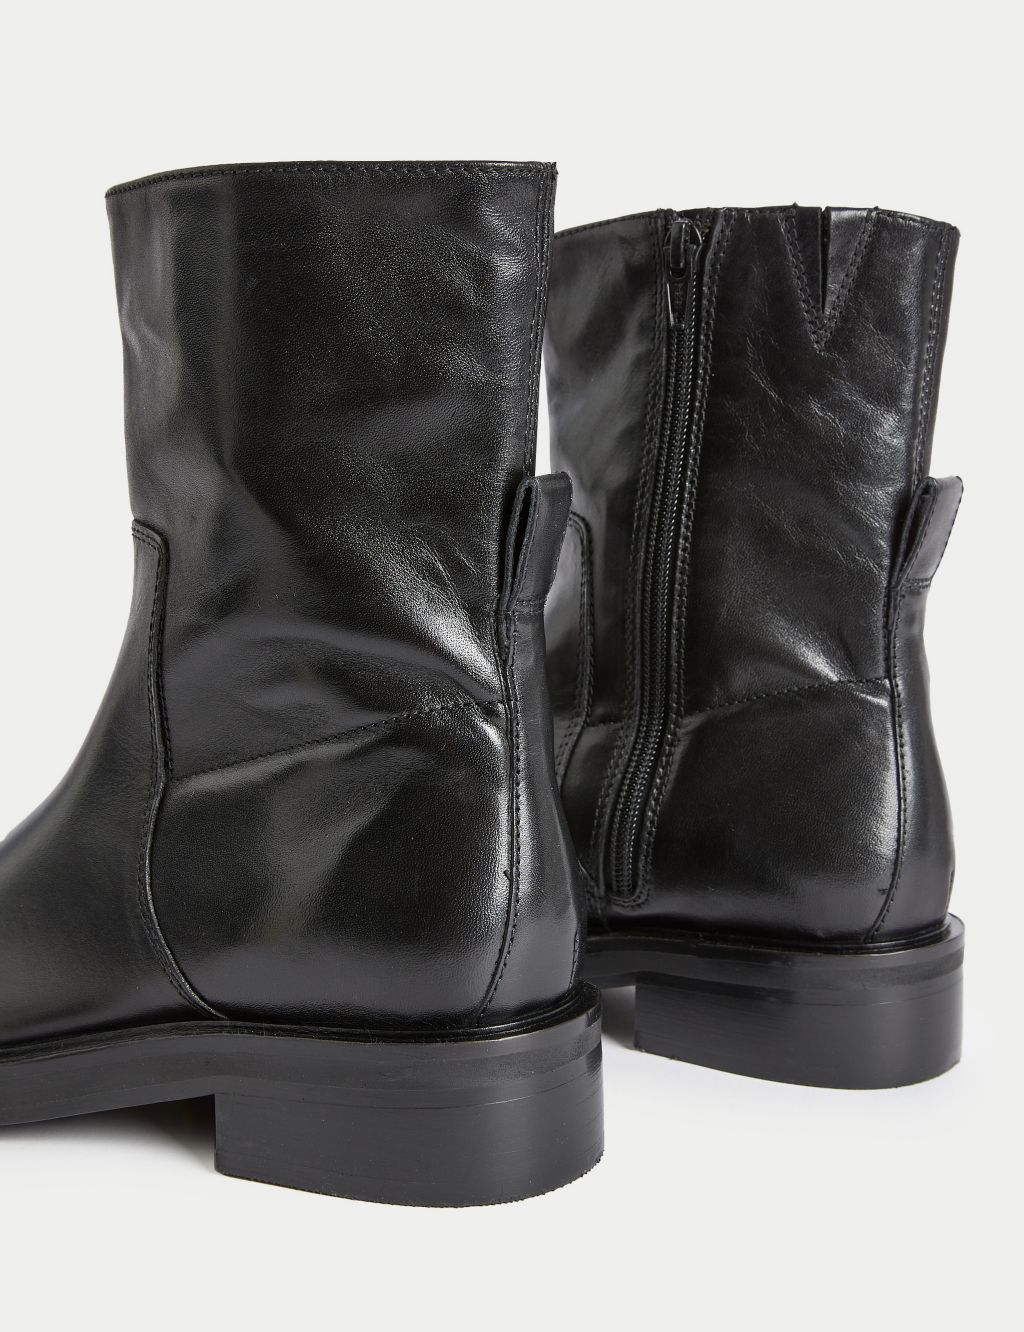 Leather Flatform Round Toe Ankle Boots image 3